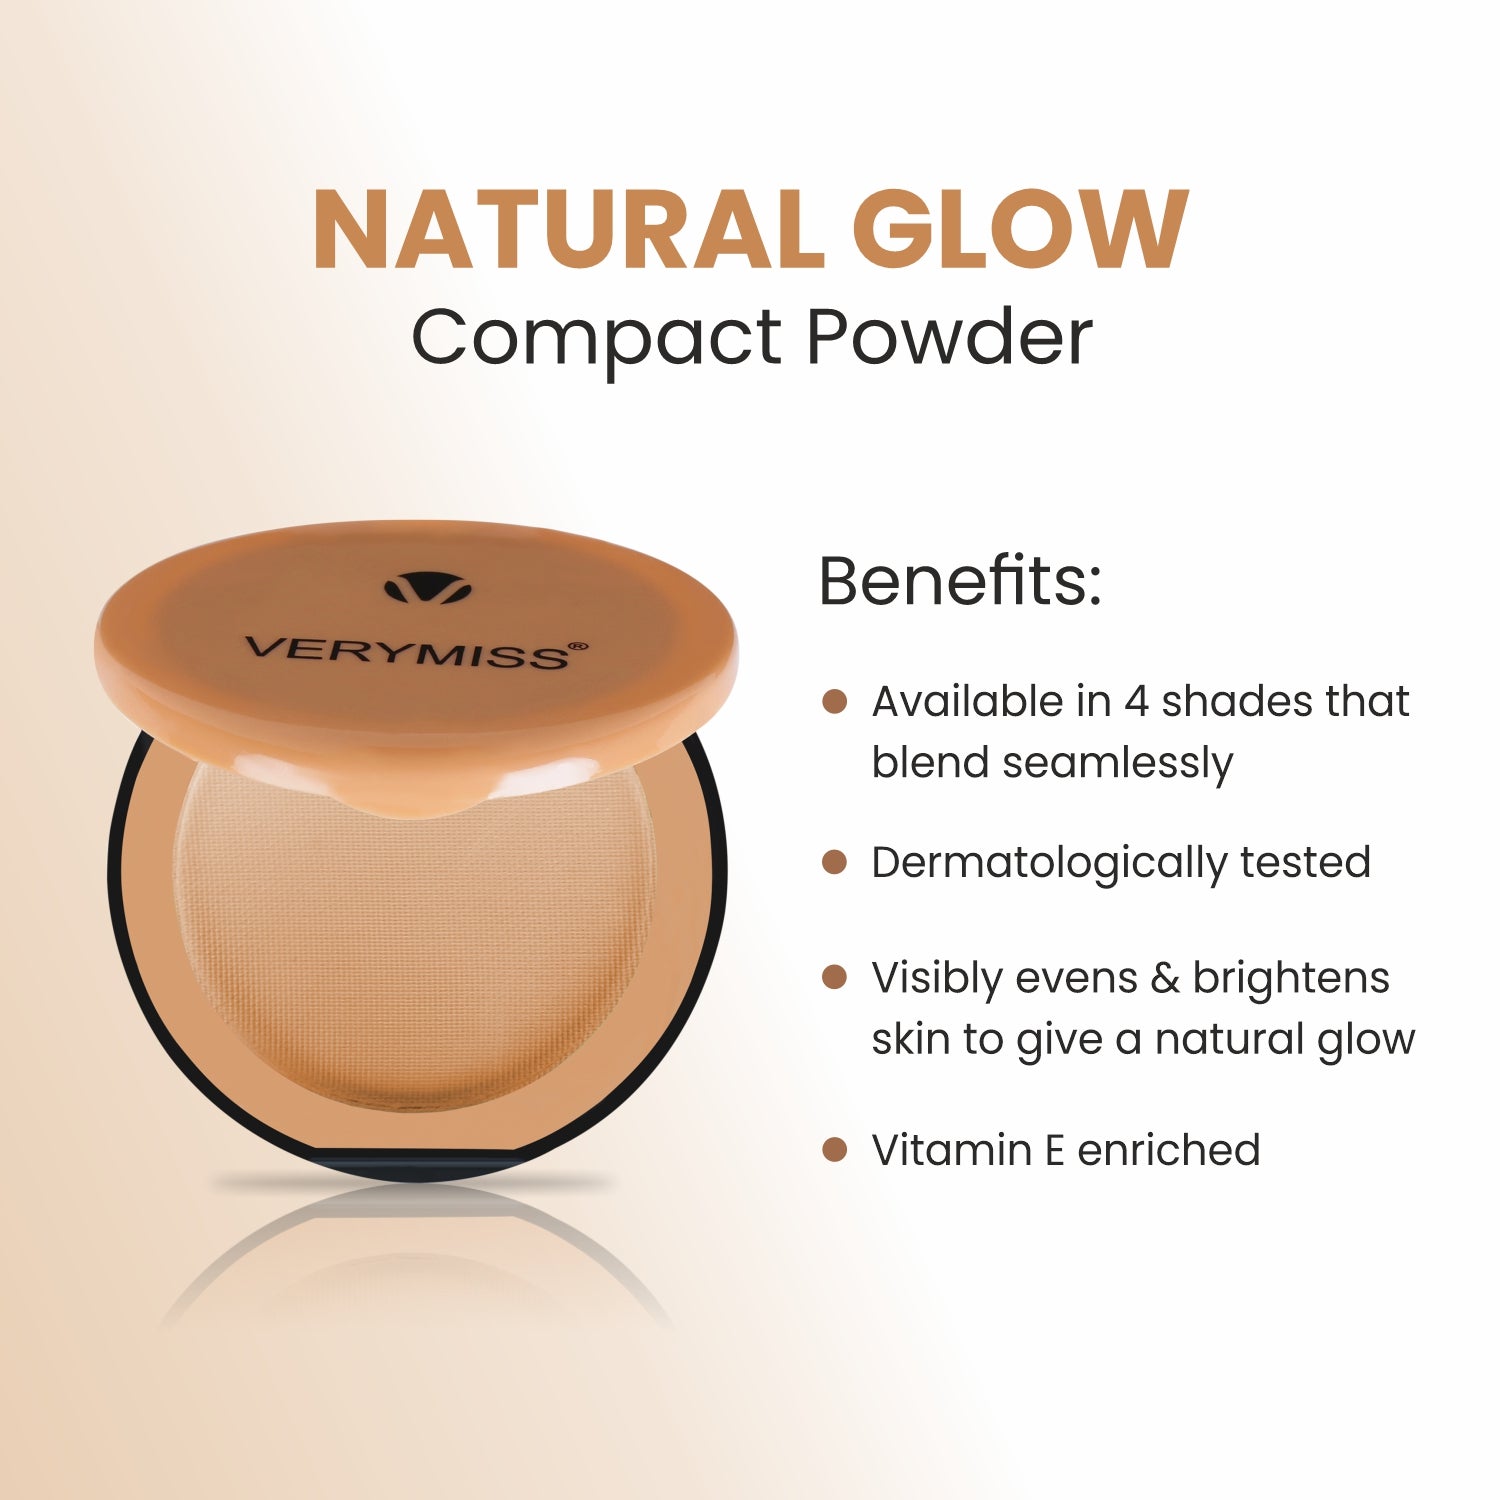 Natural Glow Compact Powder - 03 Beige